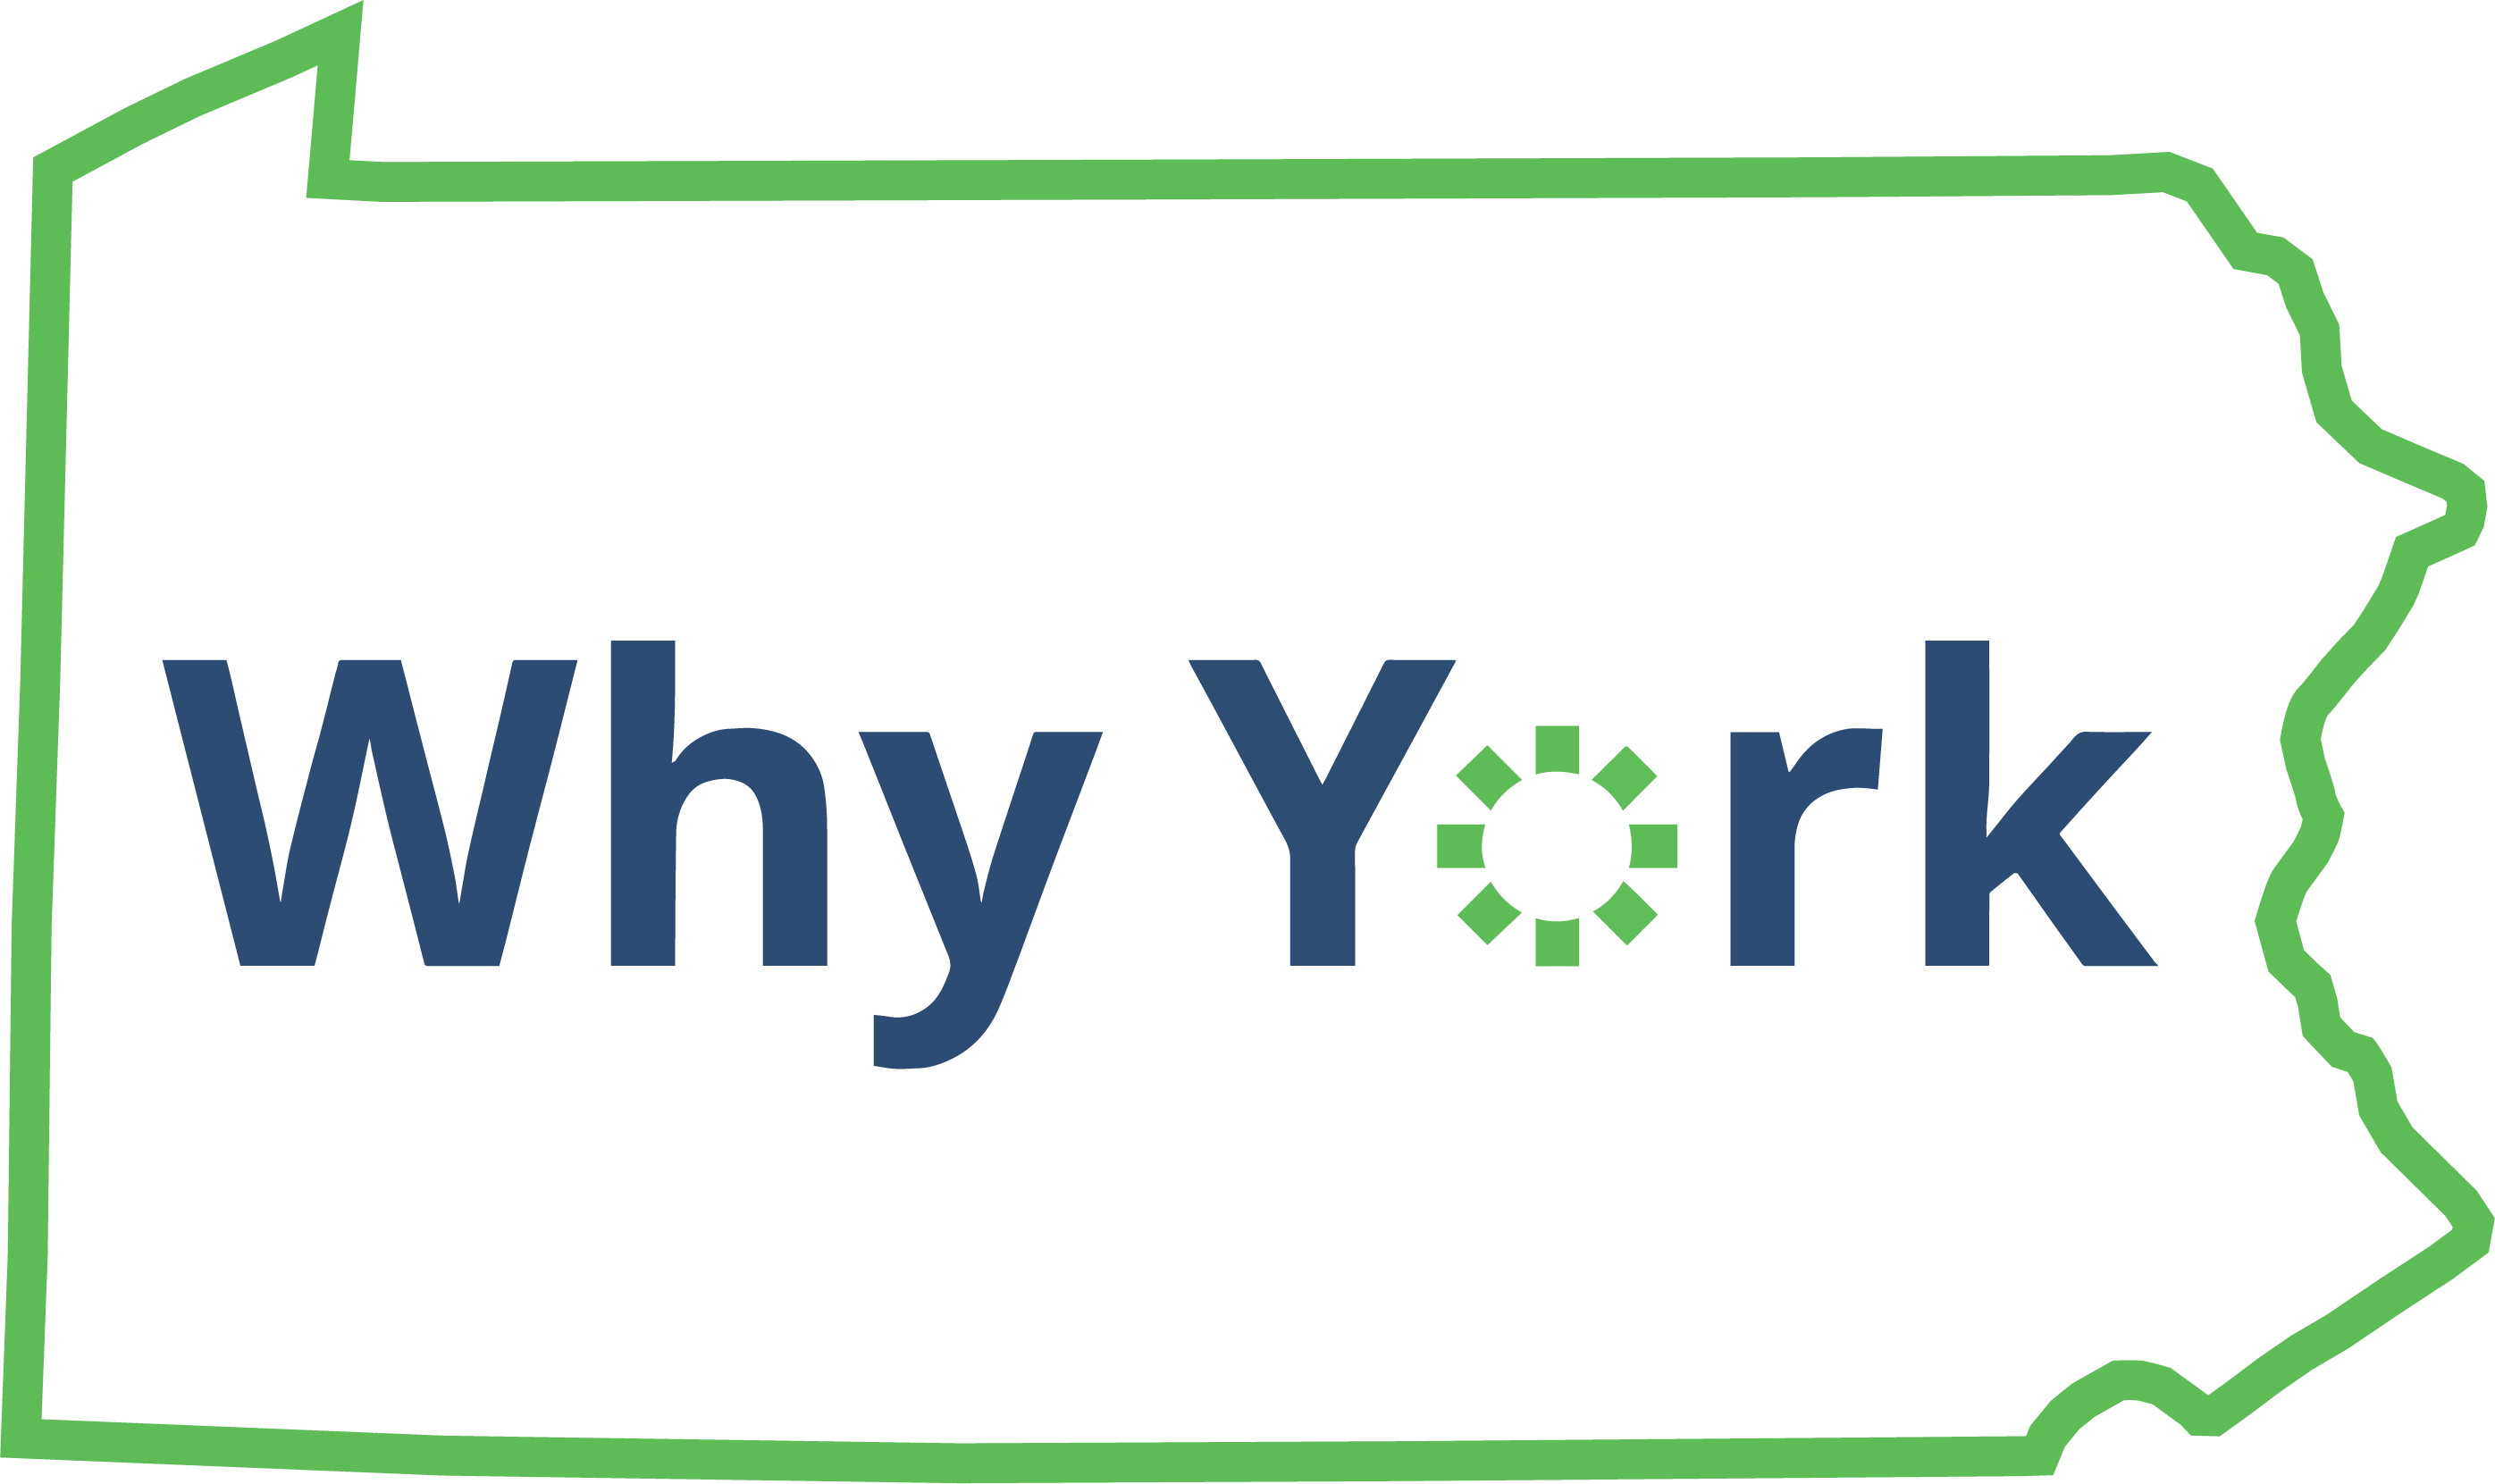 (c) Whyyorkpa.com